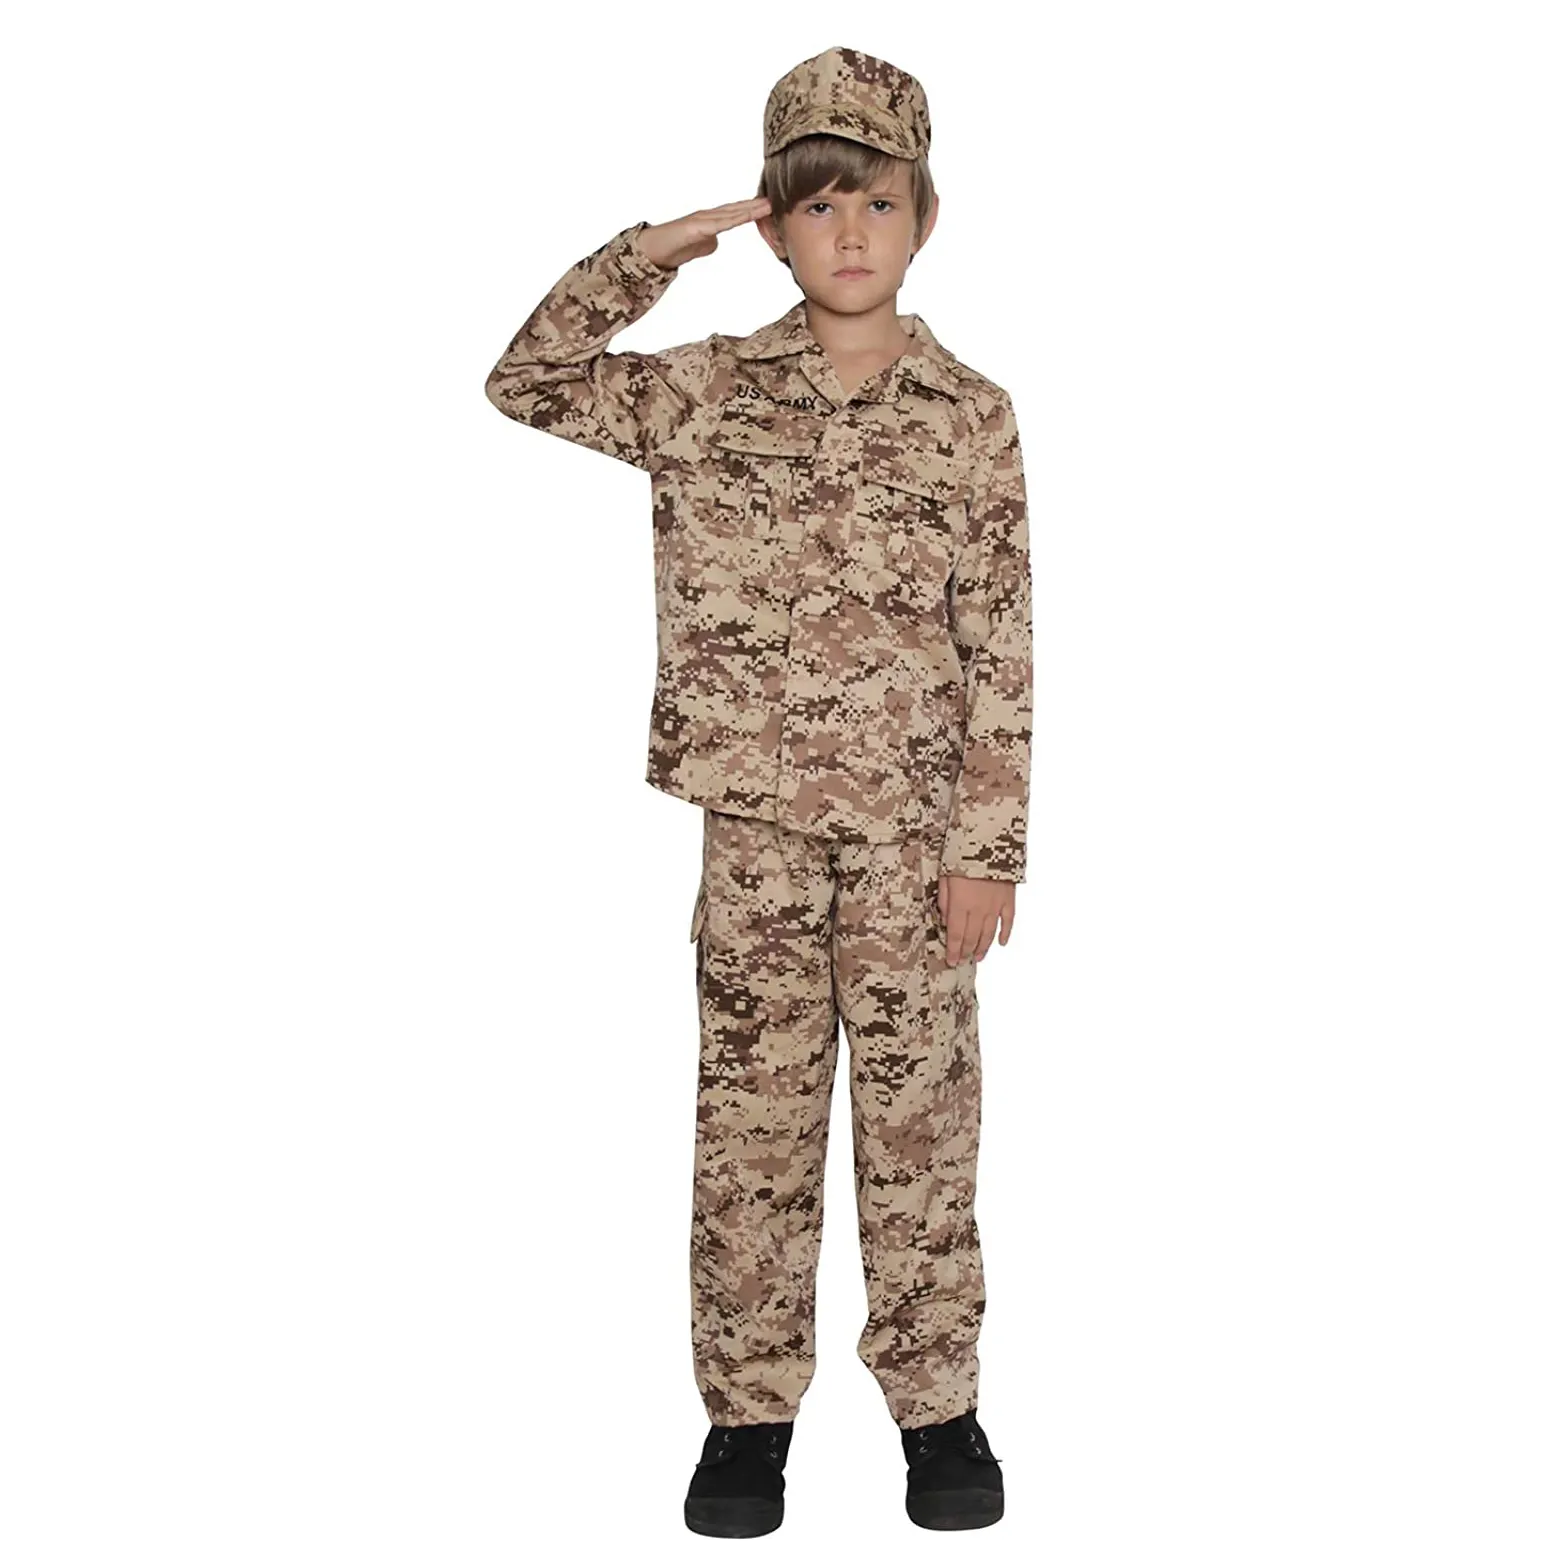 Pakaian Tentara untuk Anak Laki-laki, Kostum Militer untuk Anak-anak, Kostum Tentara Anak Laki-laki